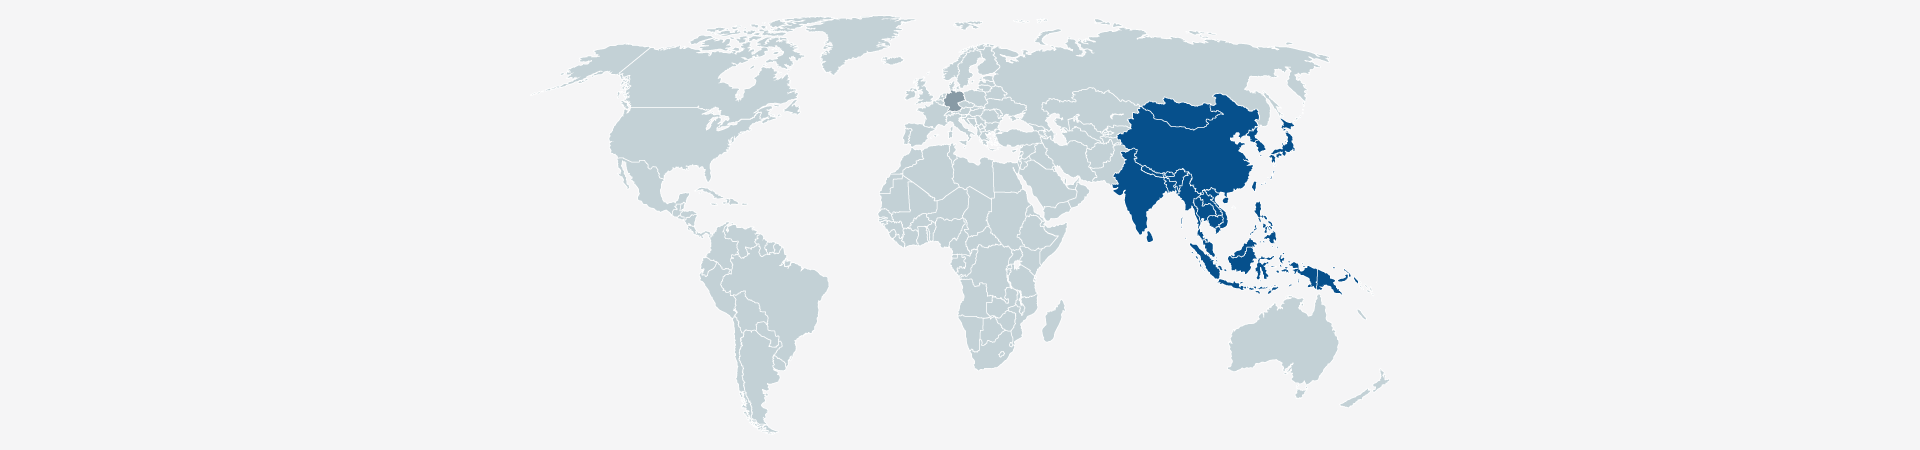 20190102 Sas Asia Worldmap